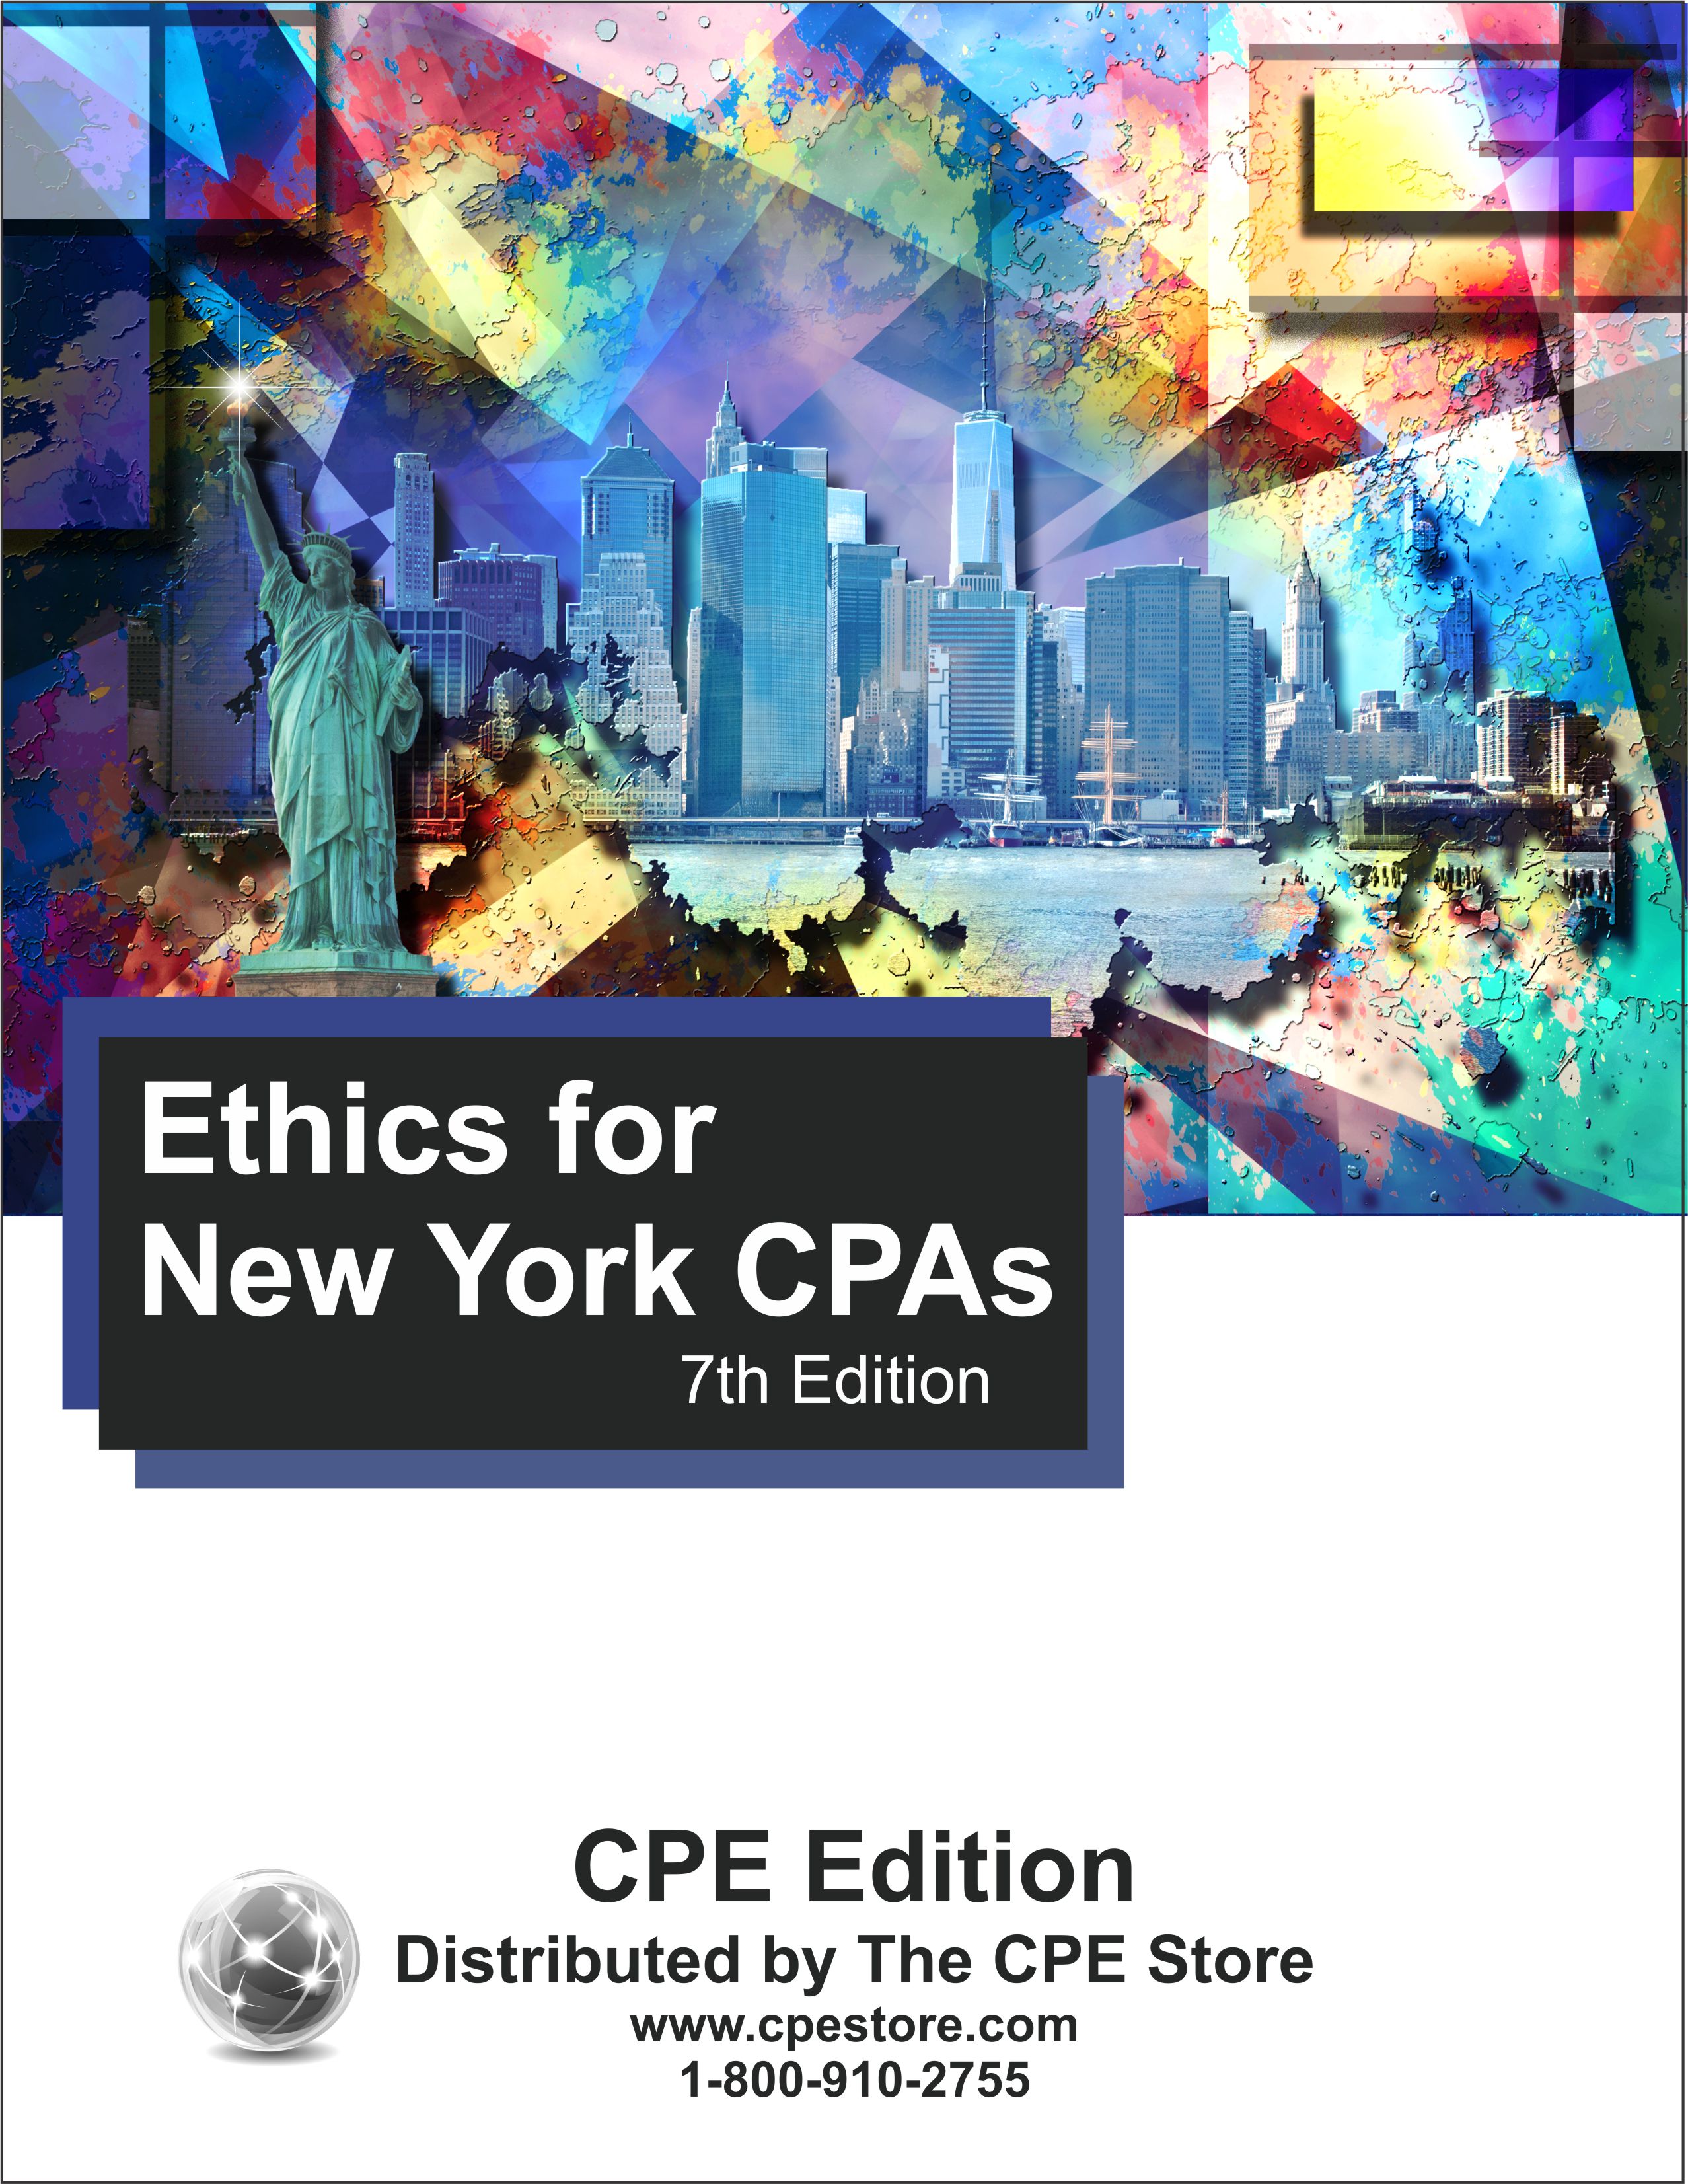 Ethics for New York CPAs